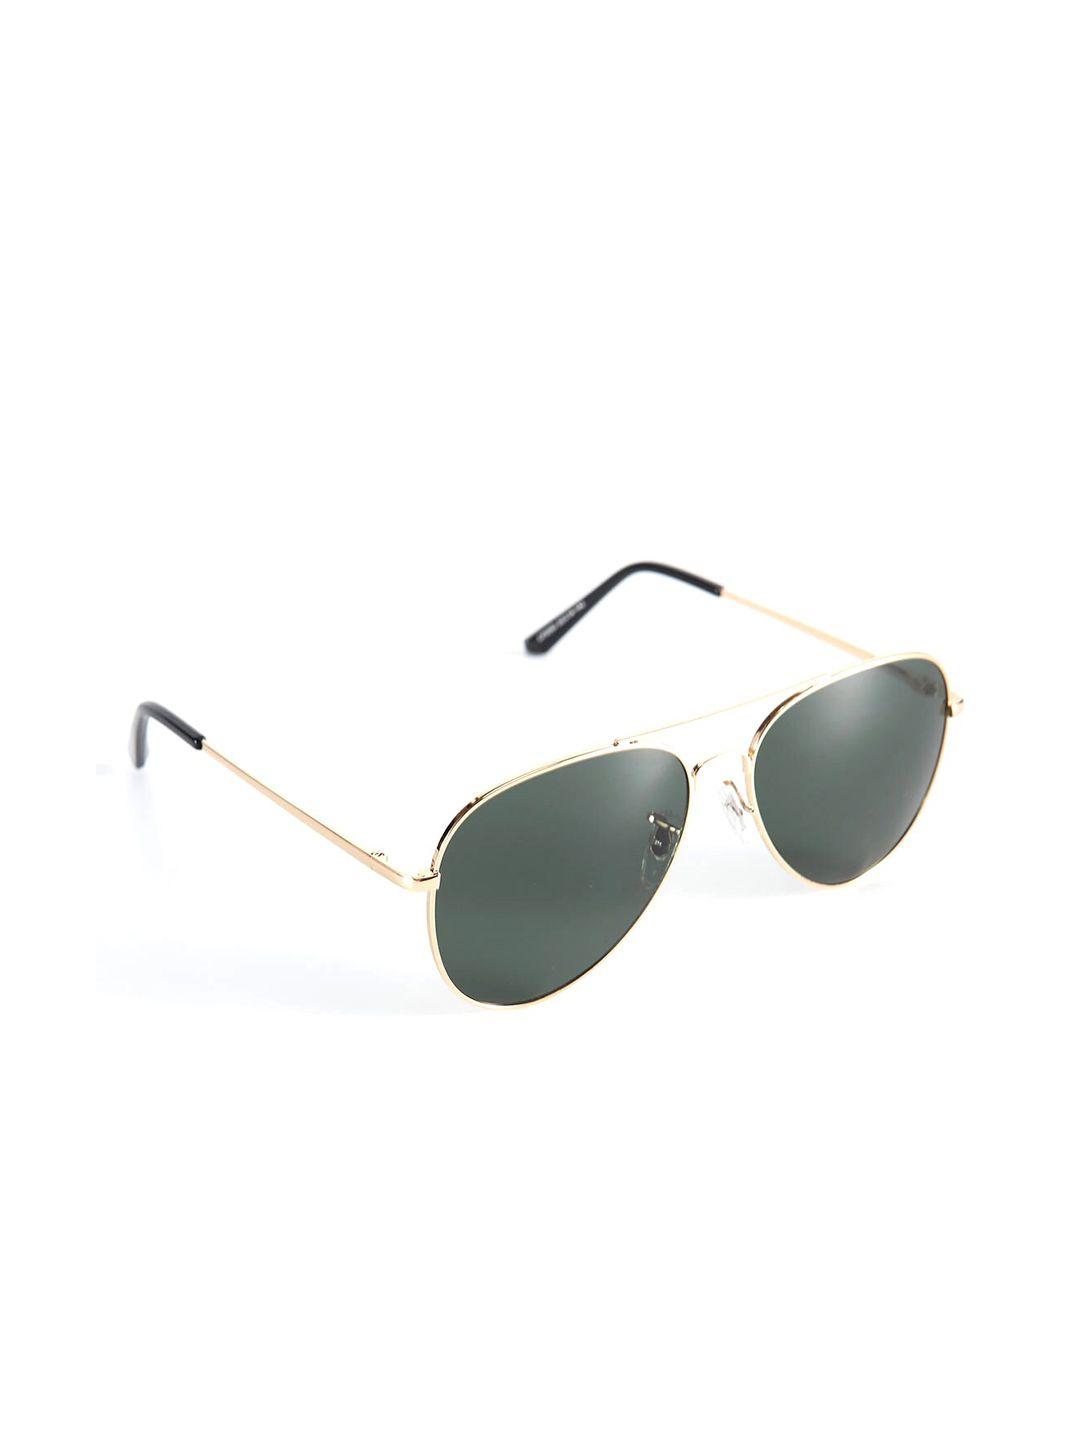 intellilens unisex green lens & gold-toned aviator sunglasses with uv protected lens